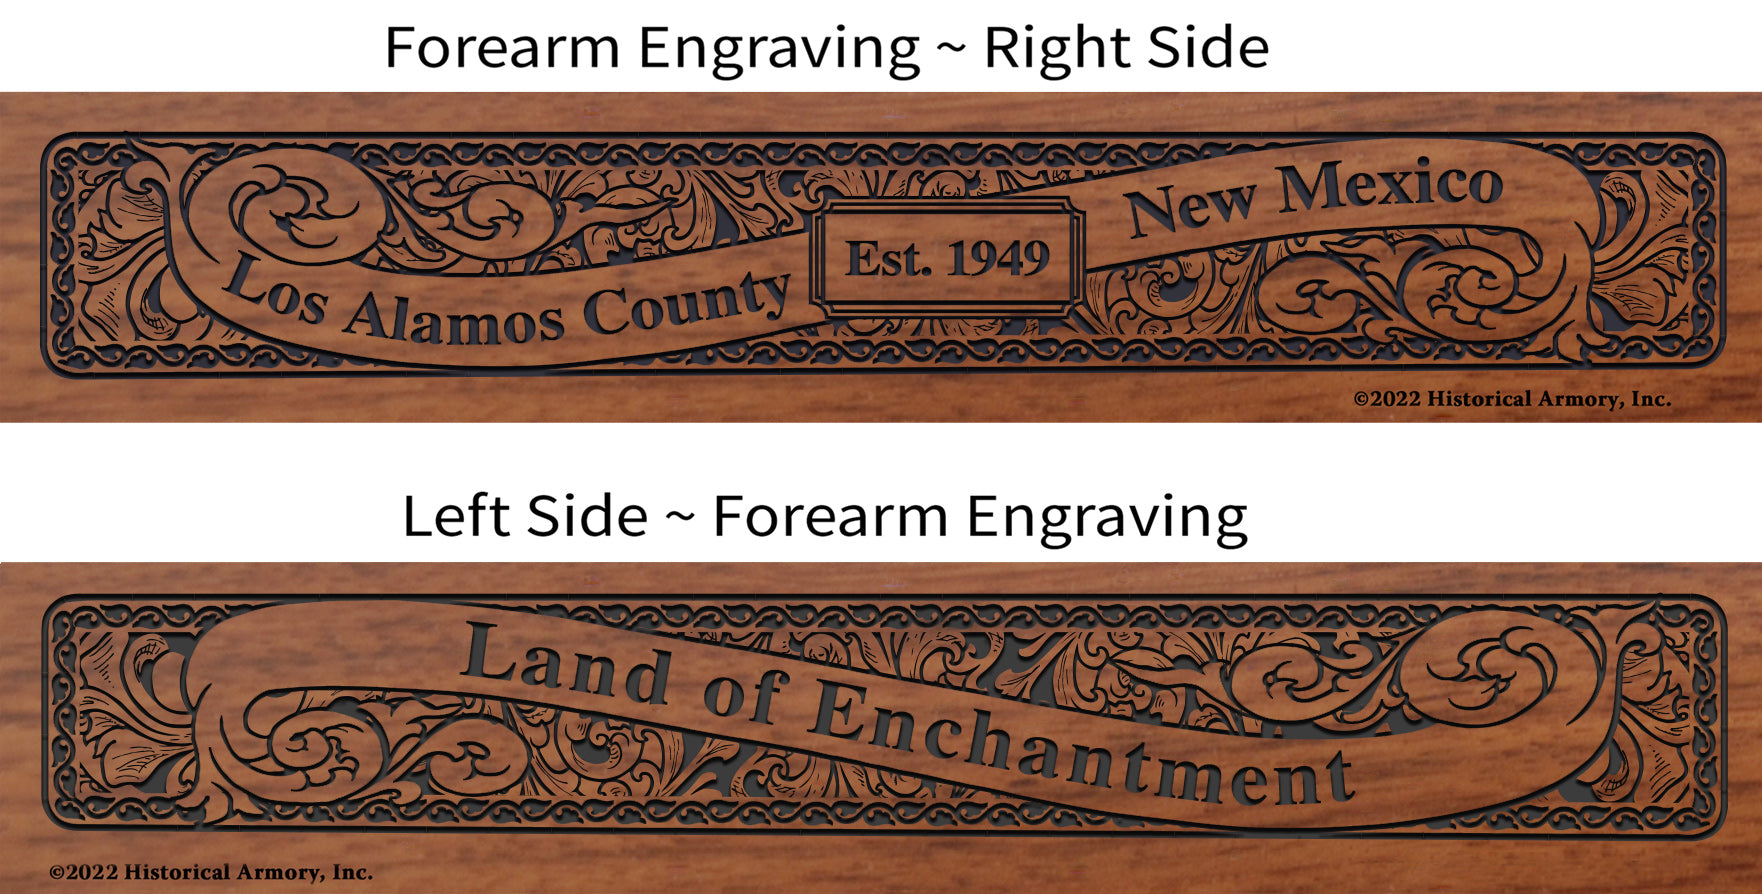 Los Alamos County New Mexico Engraved Rifle Forearm